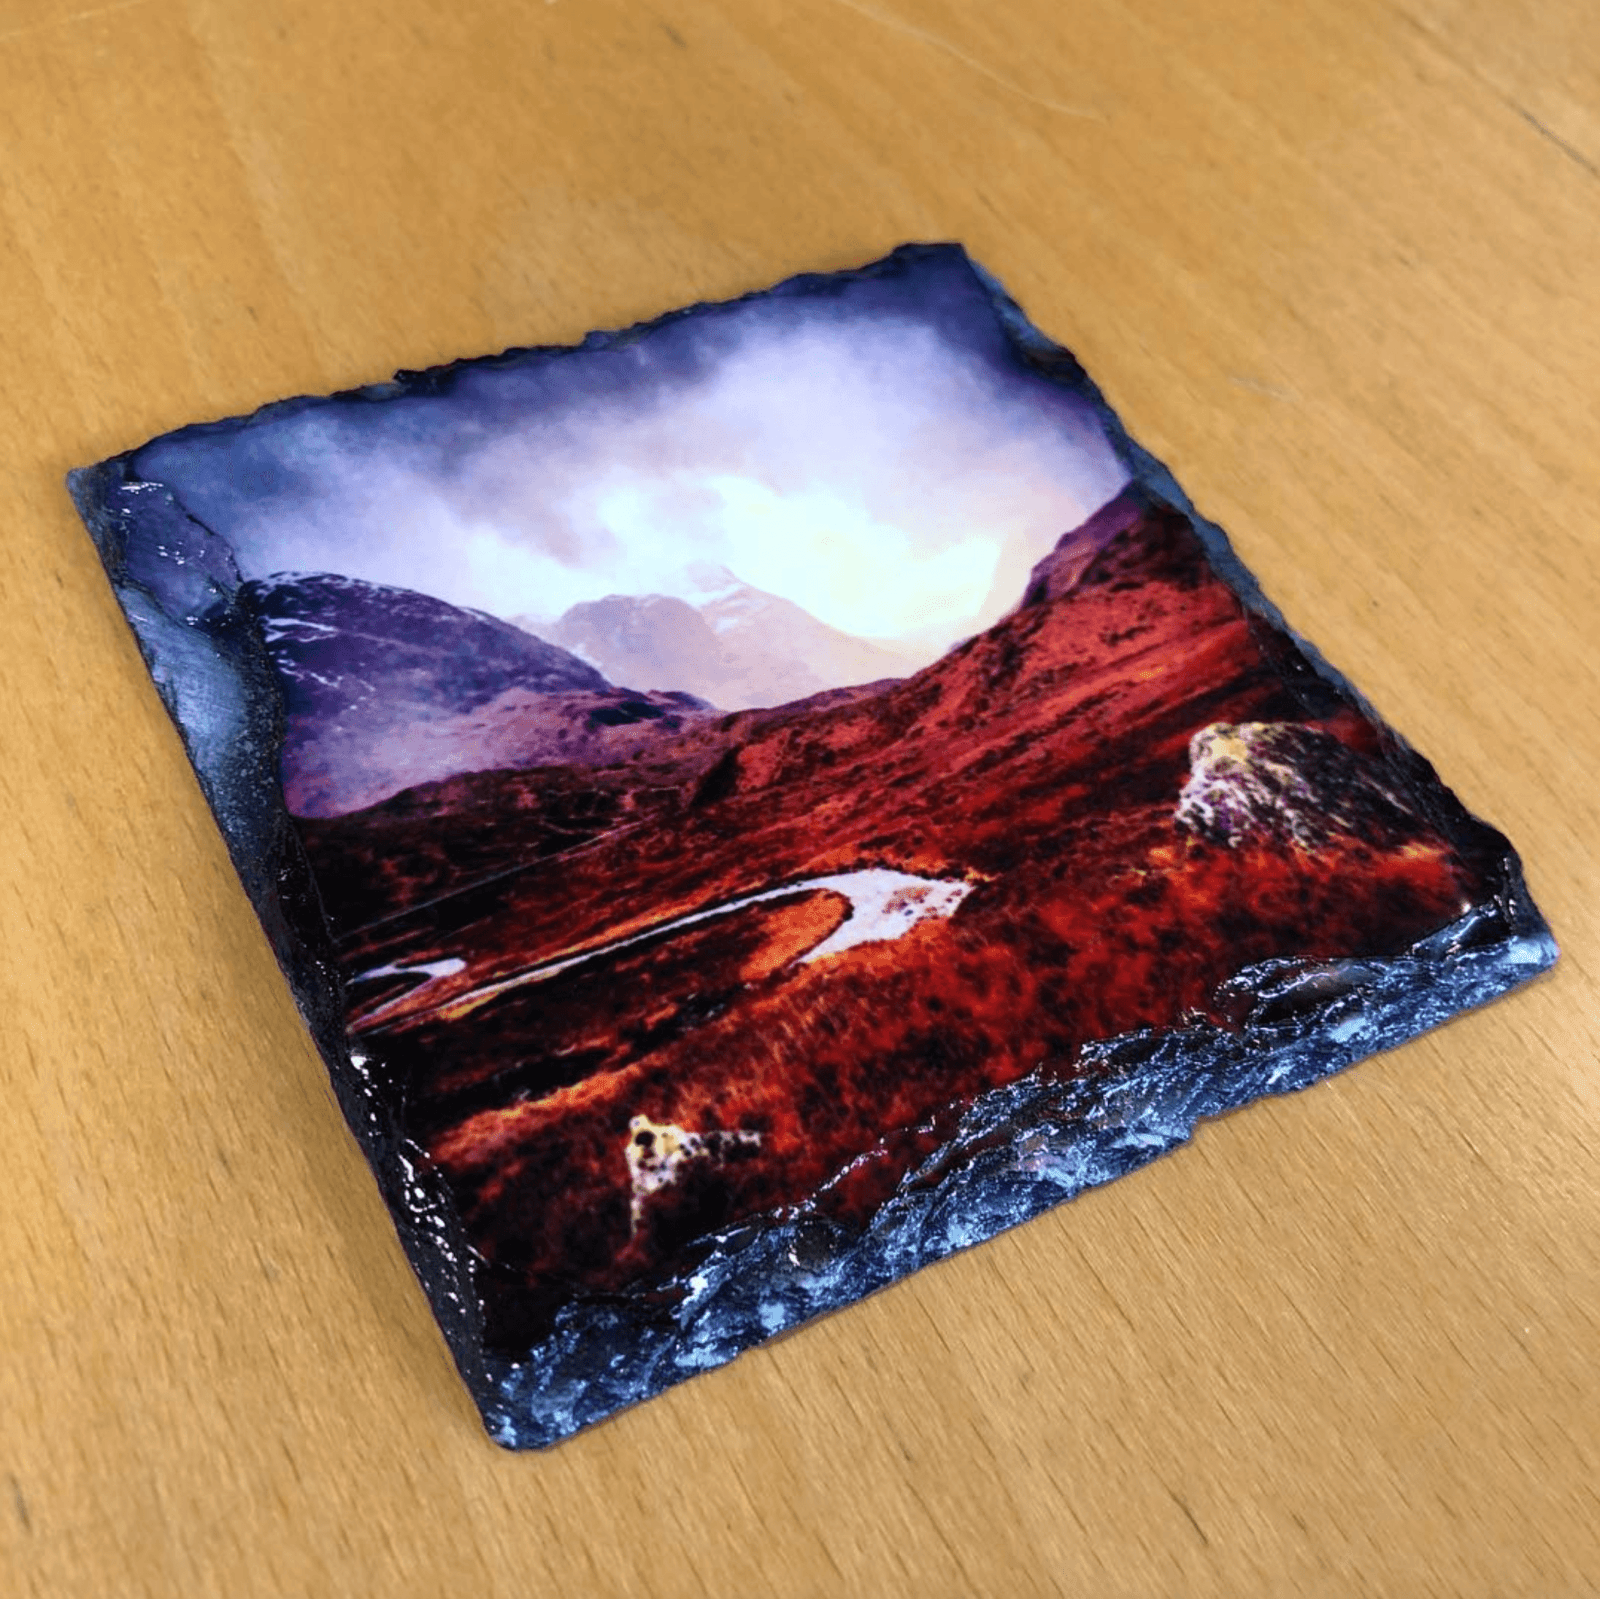 Loch Lomond Moonlight Slate Art-Slate Art-Scottish Lochs & Mountains Art Gallery-Paintings, Prints, Homeware, Art Gifts From Scotland By Scottish Artist Kevin Hunter